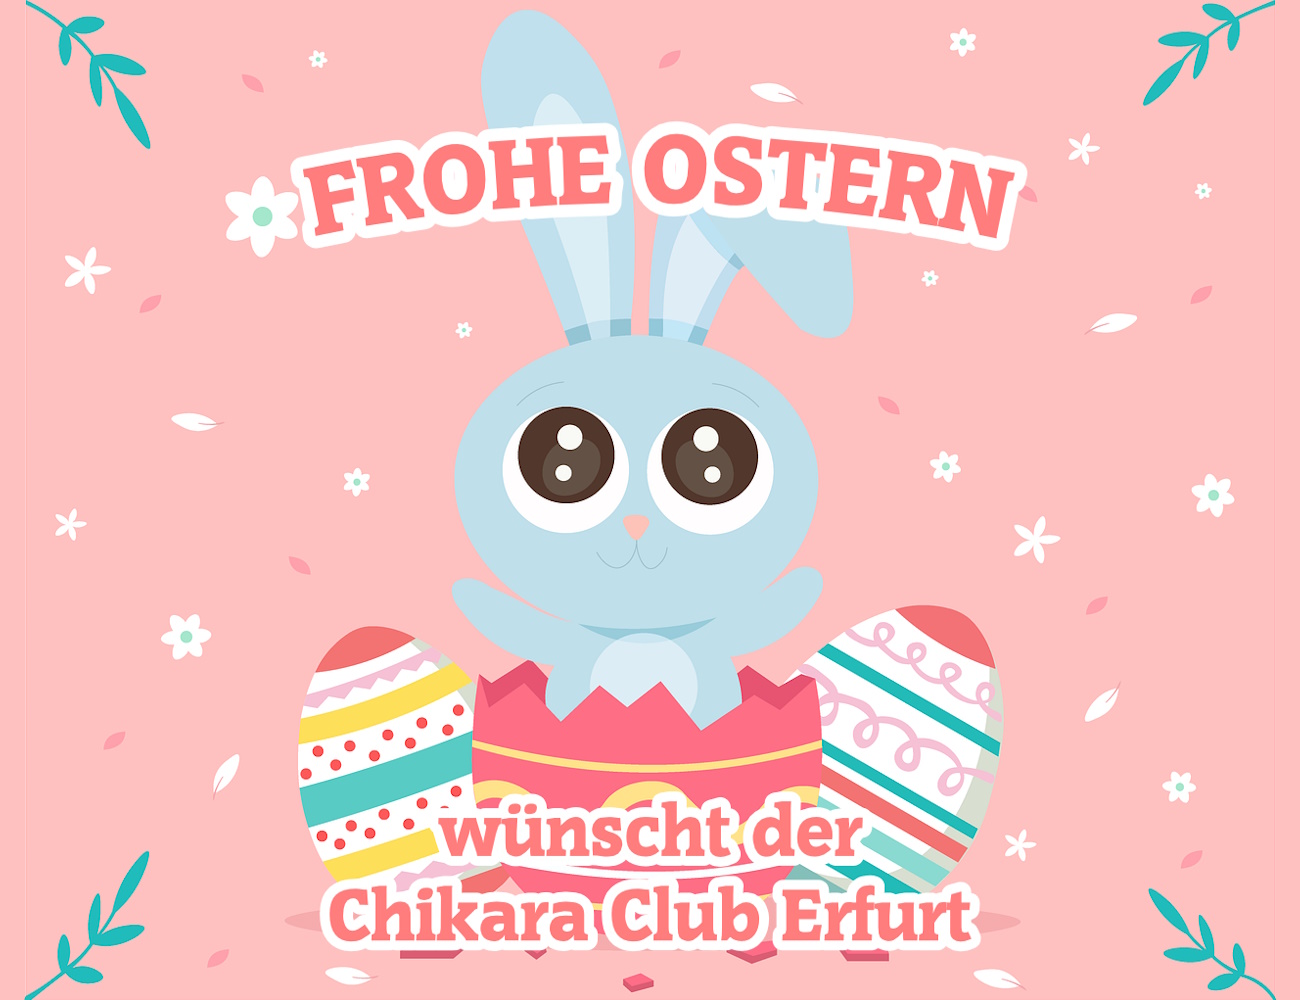 Frohe Osterfeiertage wünscht der Chikara Club Erfurt